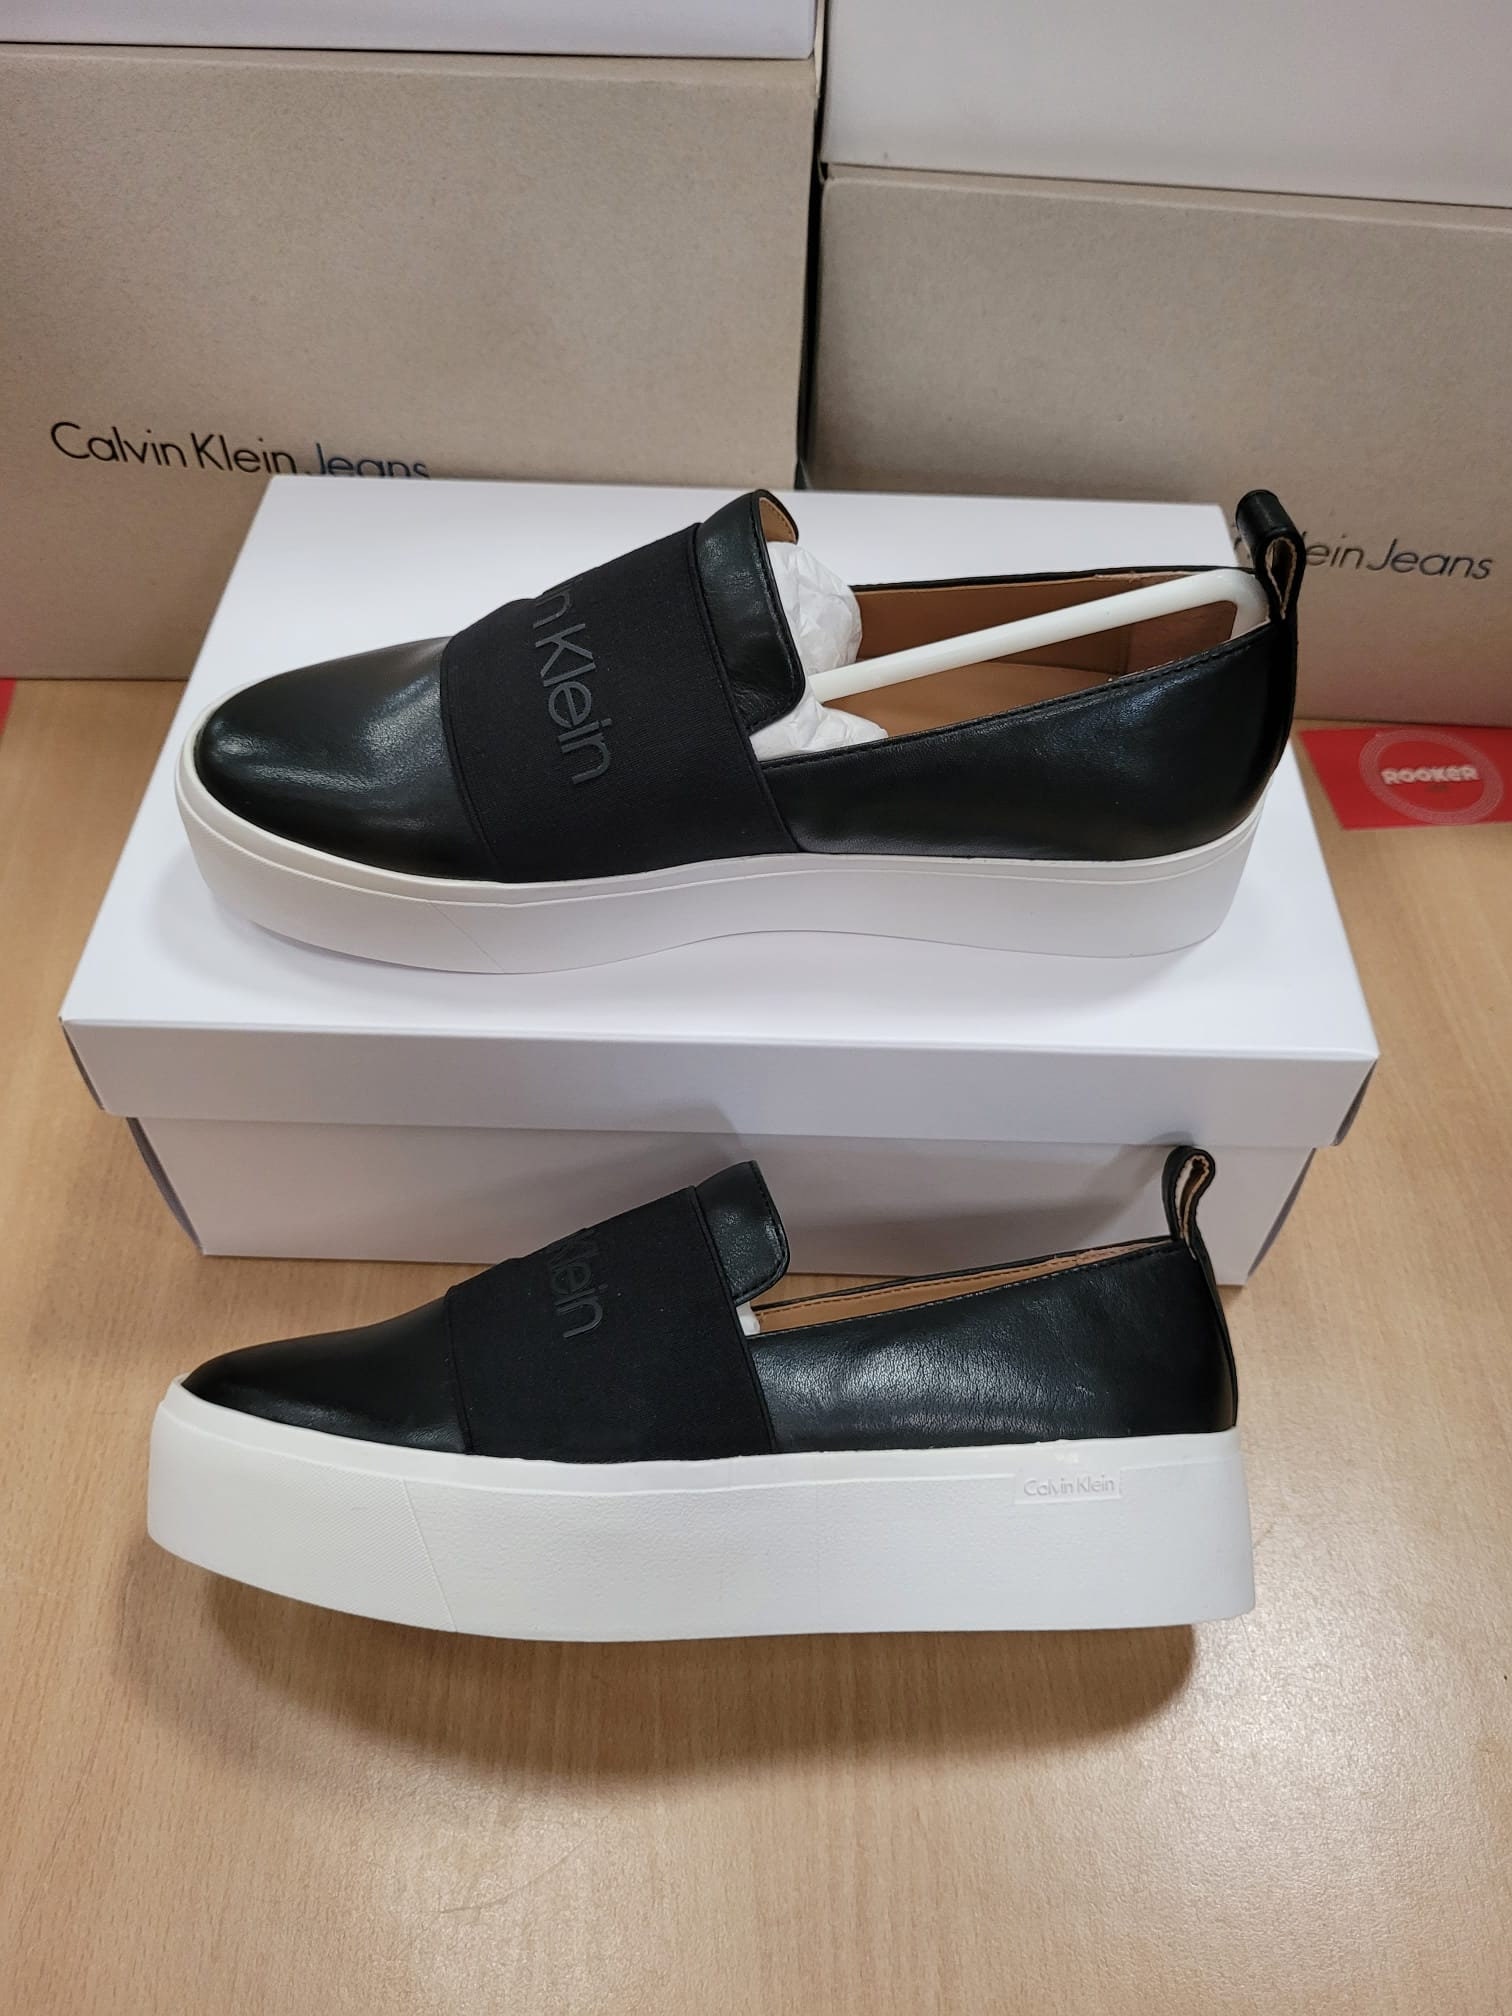 Akvarium Becks Inspektør New Calvin Klein Leather Loafers / Shoes EU 36 Black White / - Etsy